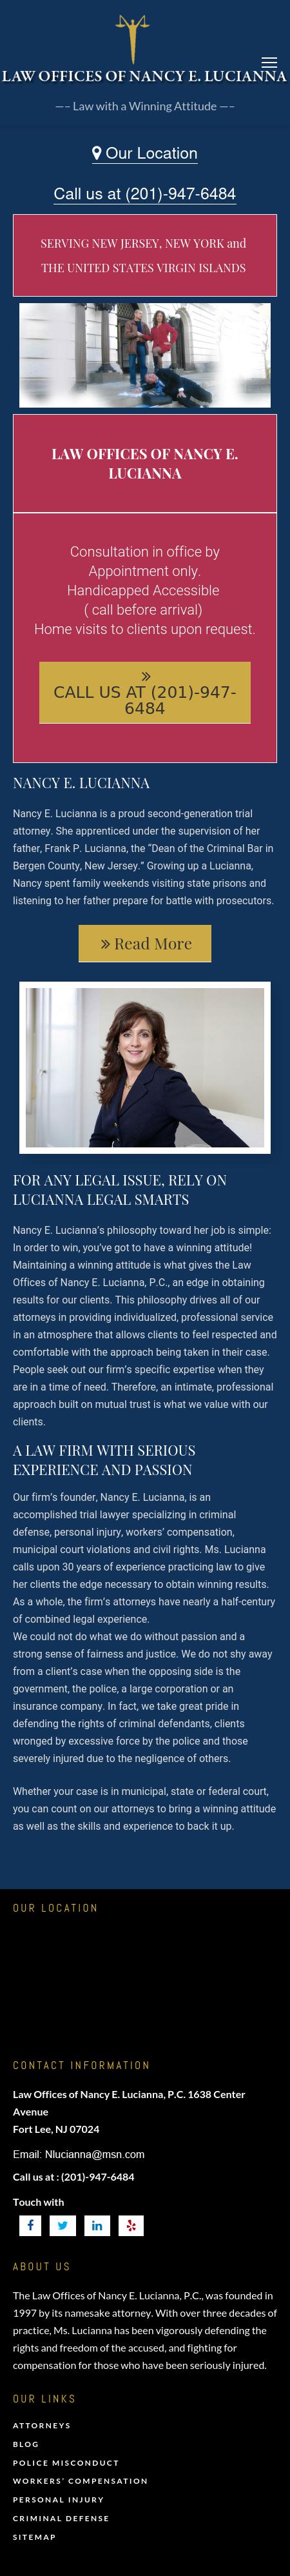 Nancy E Lucianna, P.C. - Fort Lee NJ Lawyers